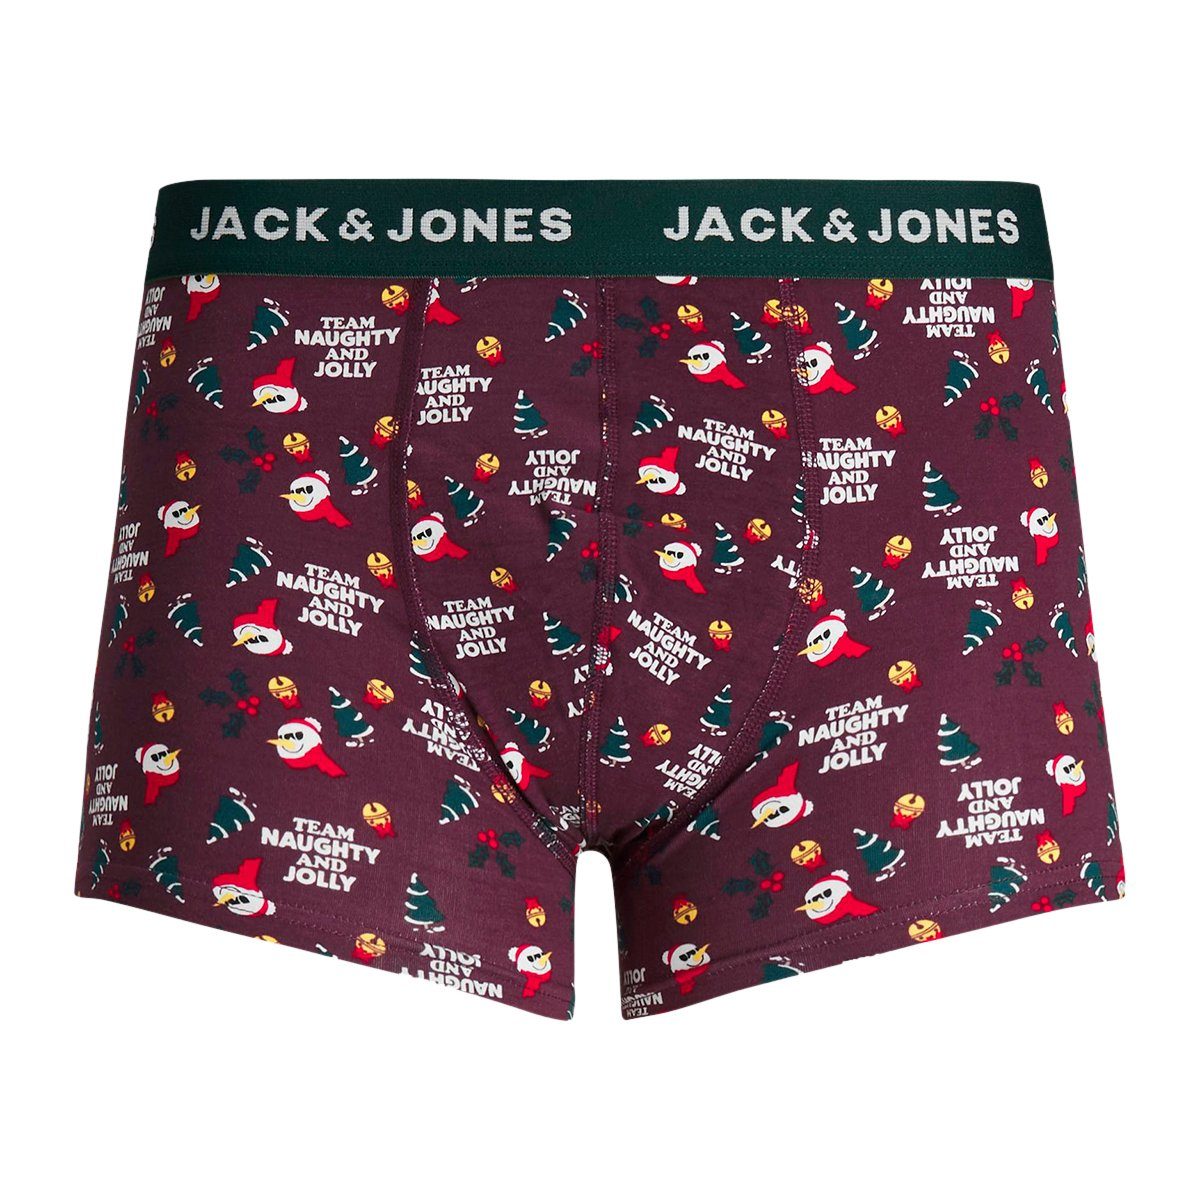 Wäsche/Bademode Boxershorts Jack & Jones Plus Boxershorts Übergrößen Herren Xmas Pants 3er-Pack weinrot/grün Jack & Jones (3 Stü